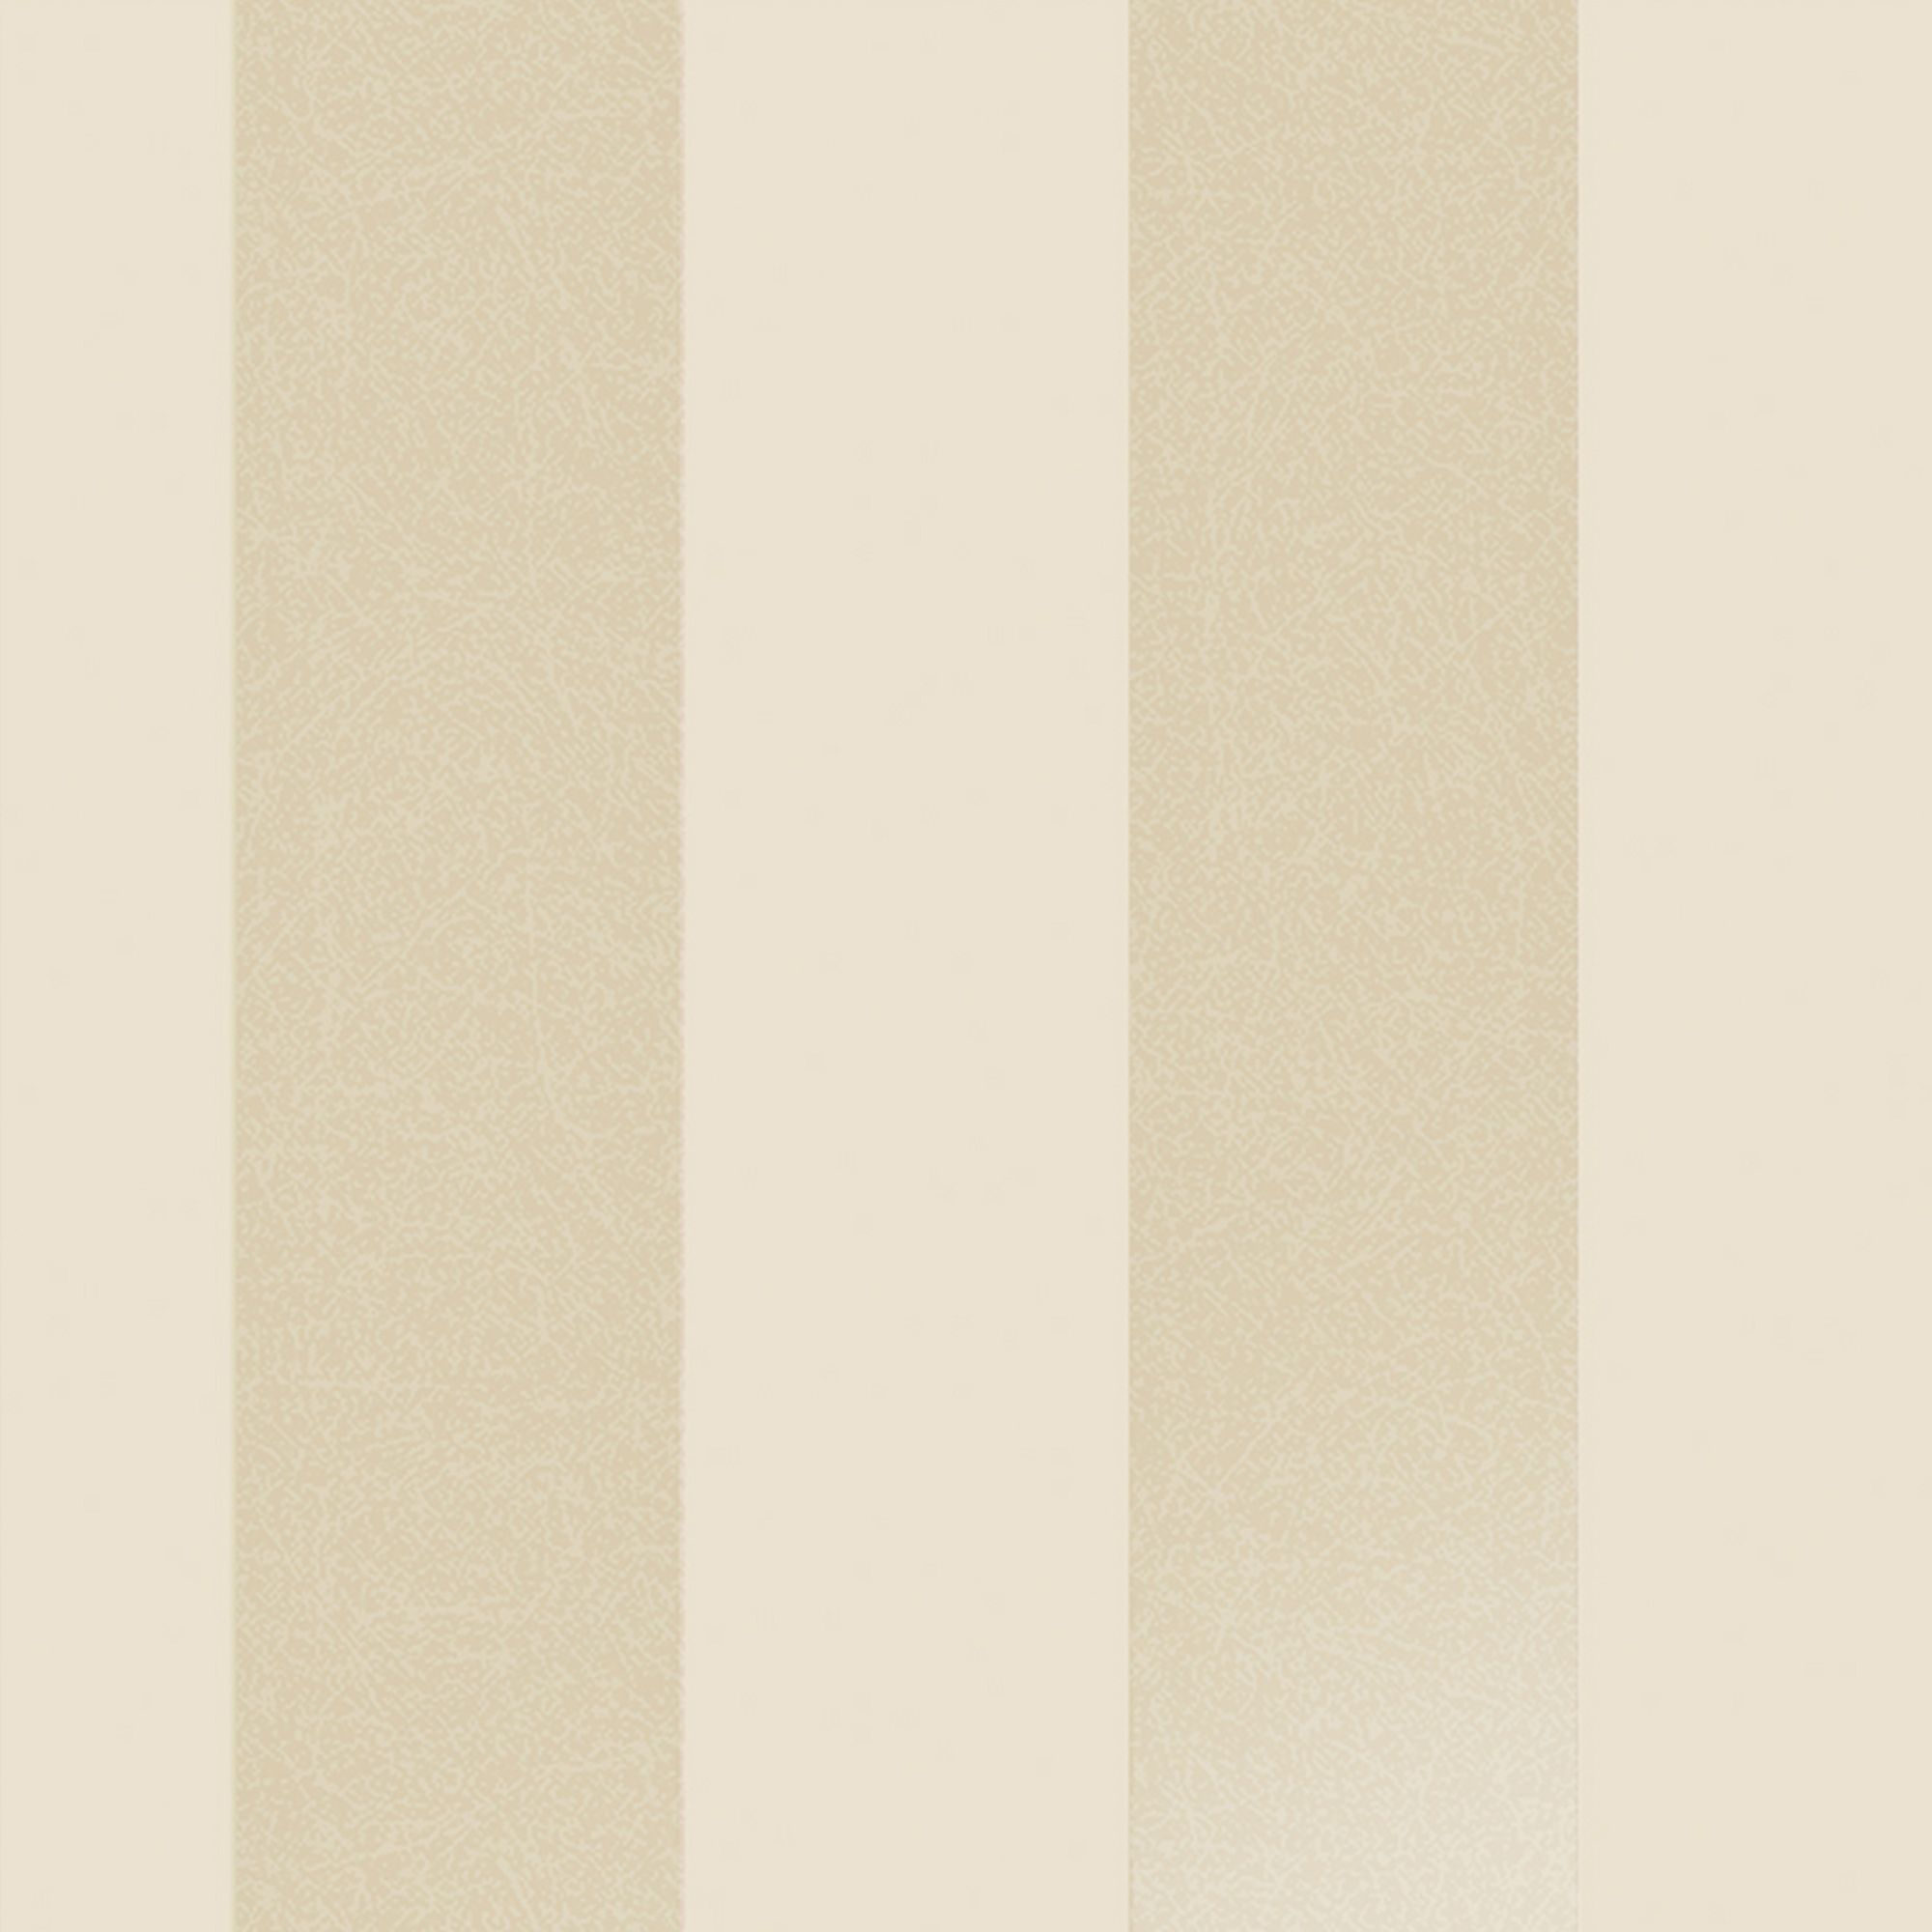 Laura Ashley Lille Linen Stripe Smooth Wallpaper